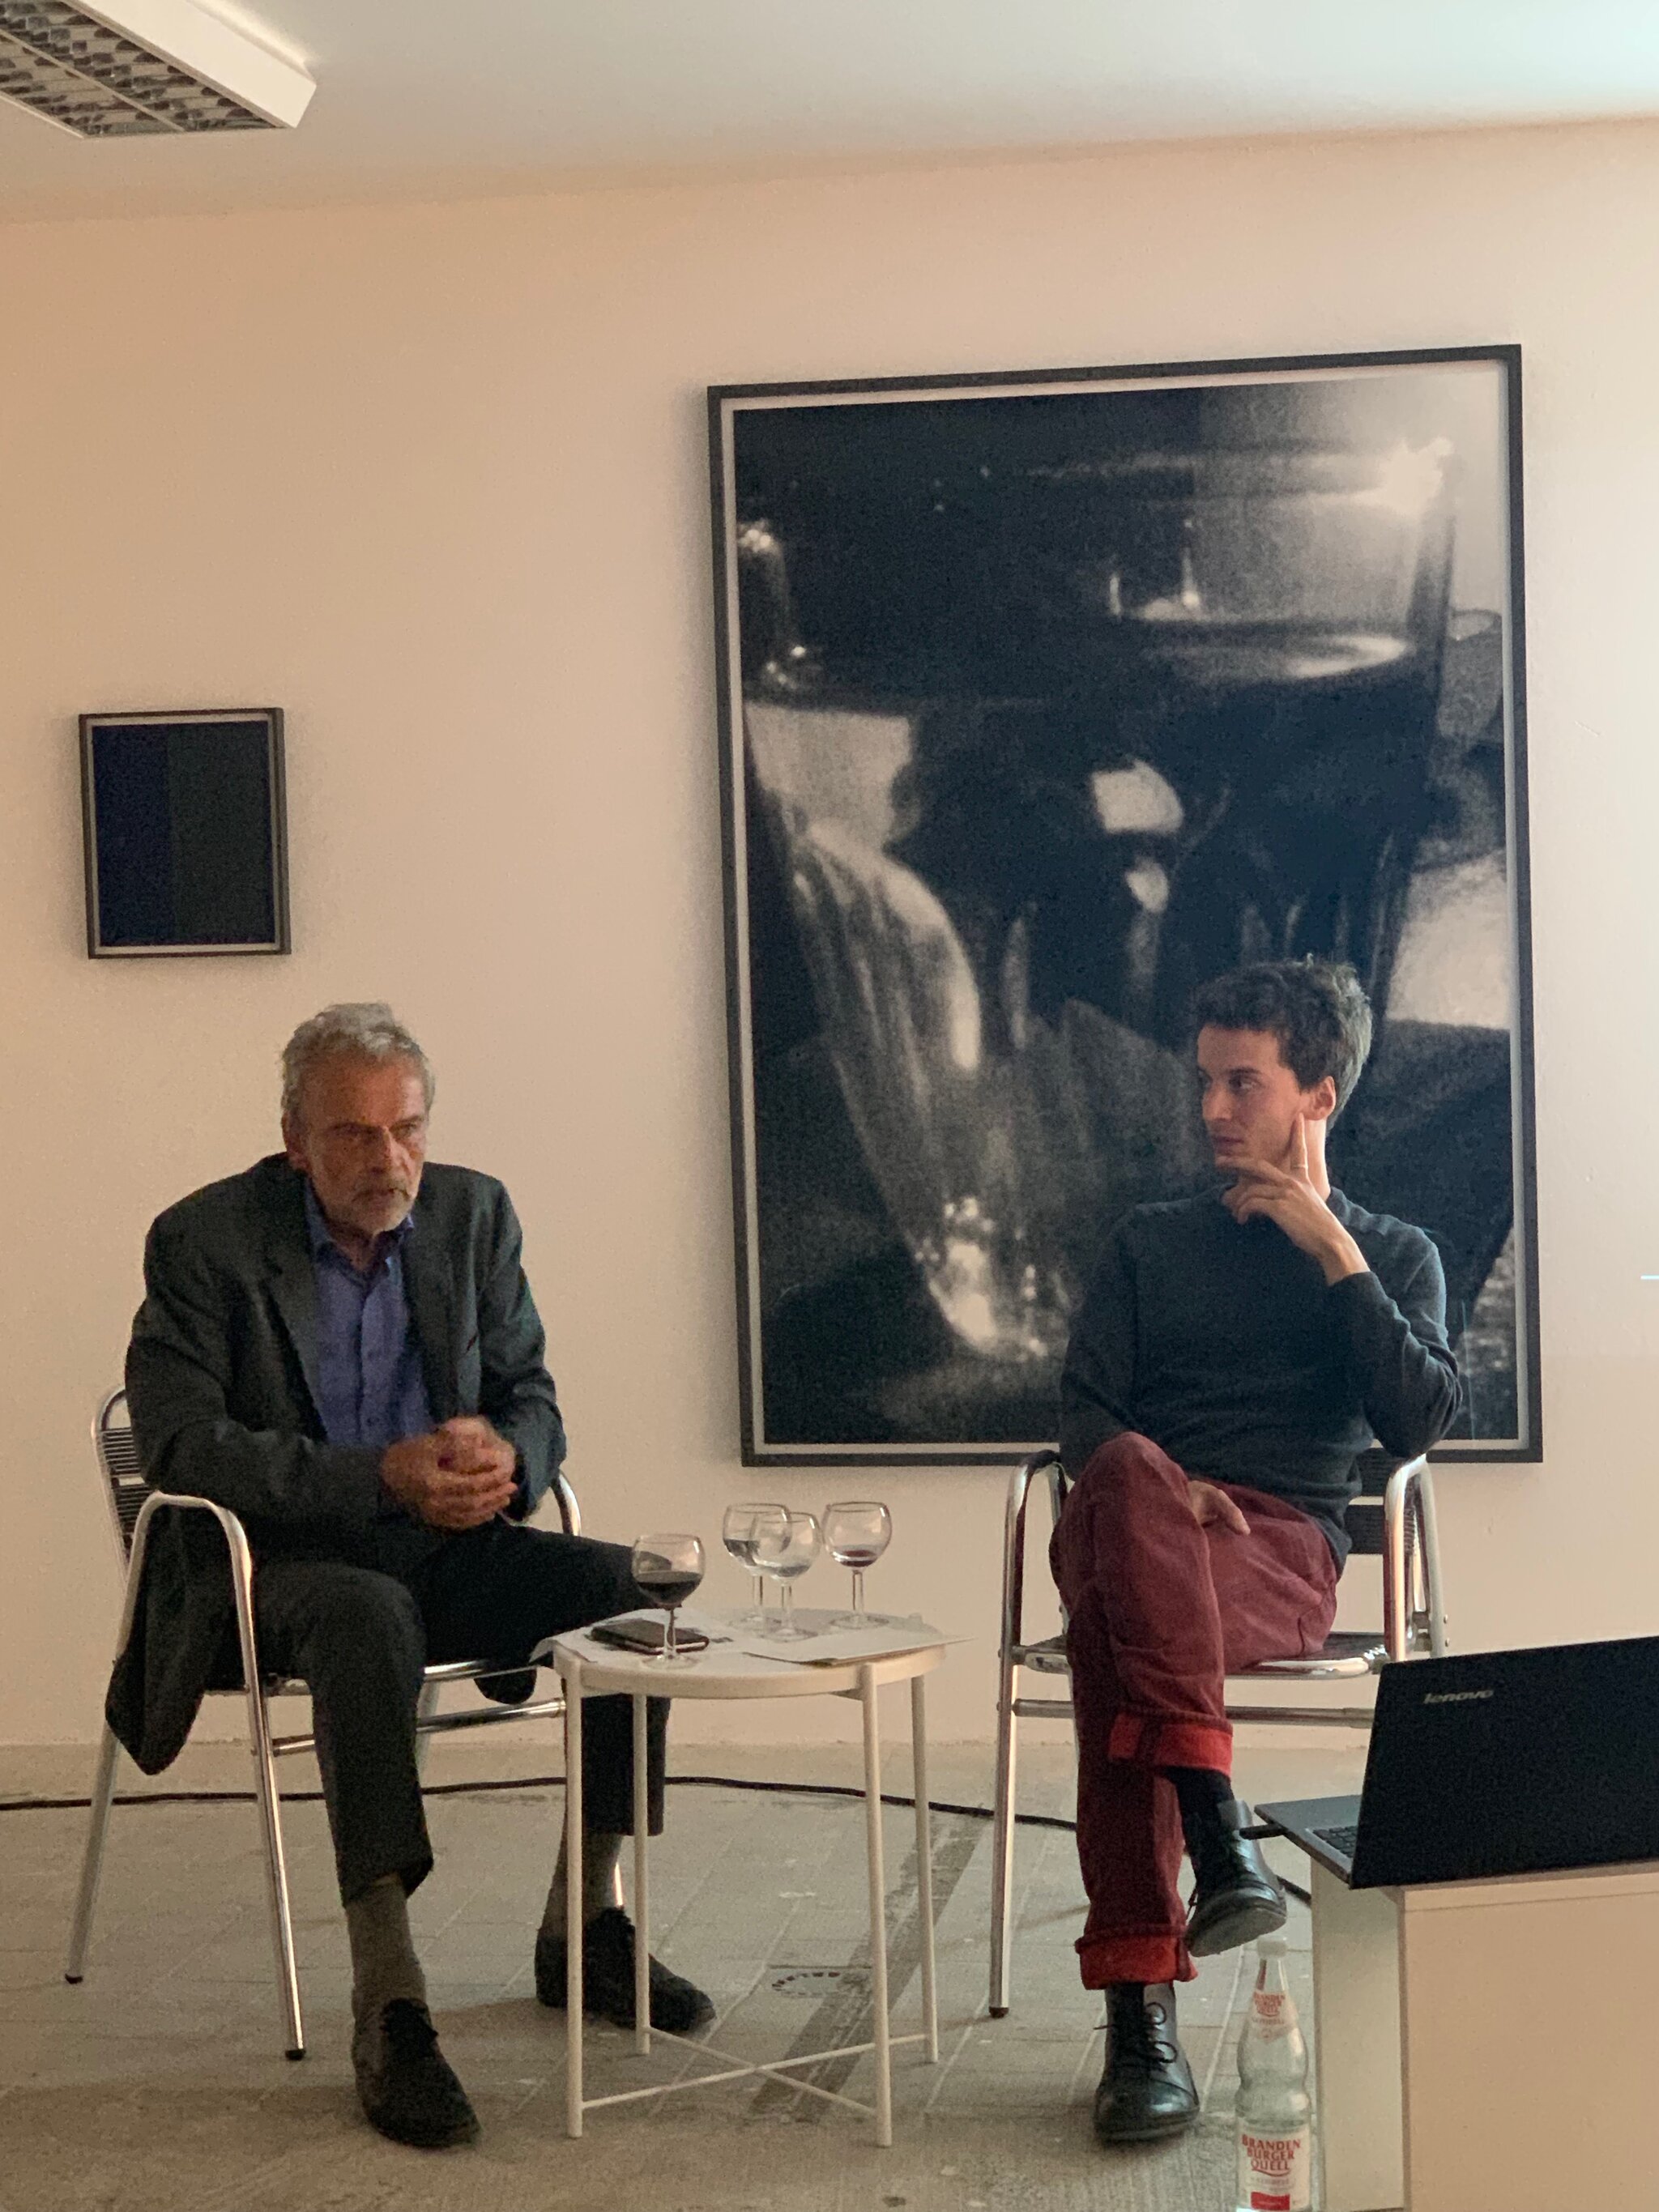 Frederik Wellmann and Horst Bredekamp - “Ein Gespräch über Funktionen der Kunst” on the evening of September 15th.